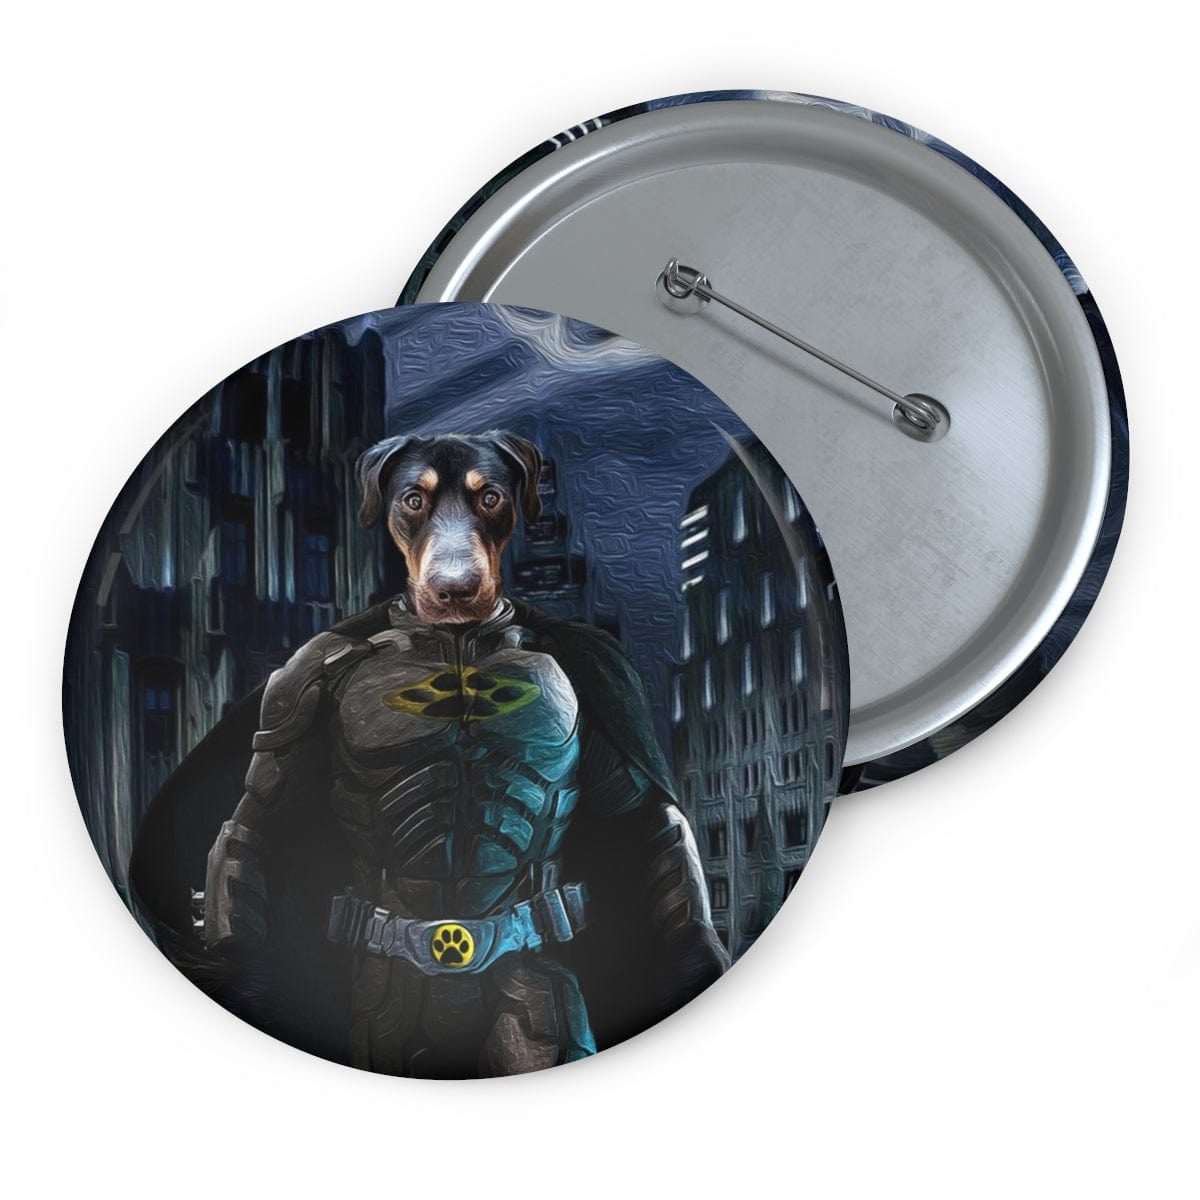 The Batdog Custom Pin